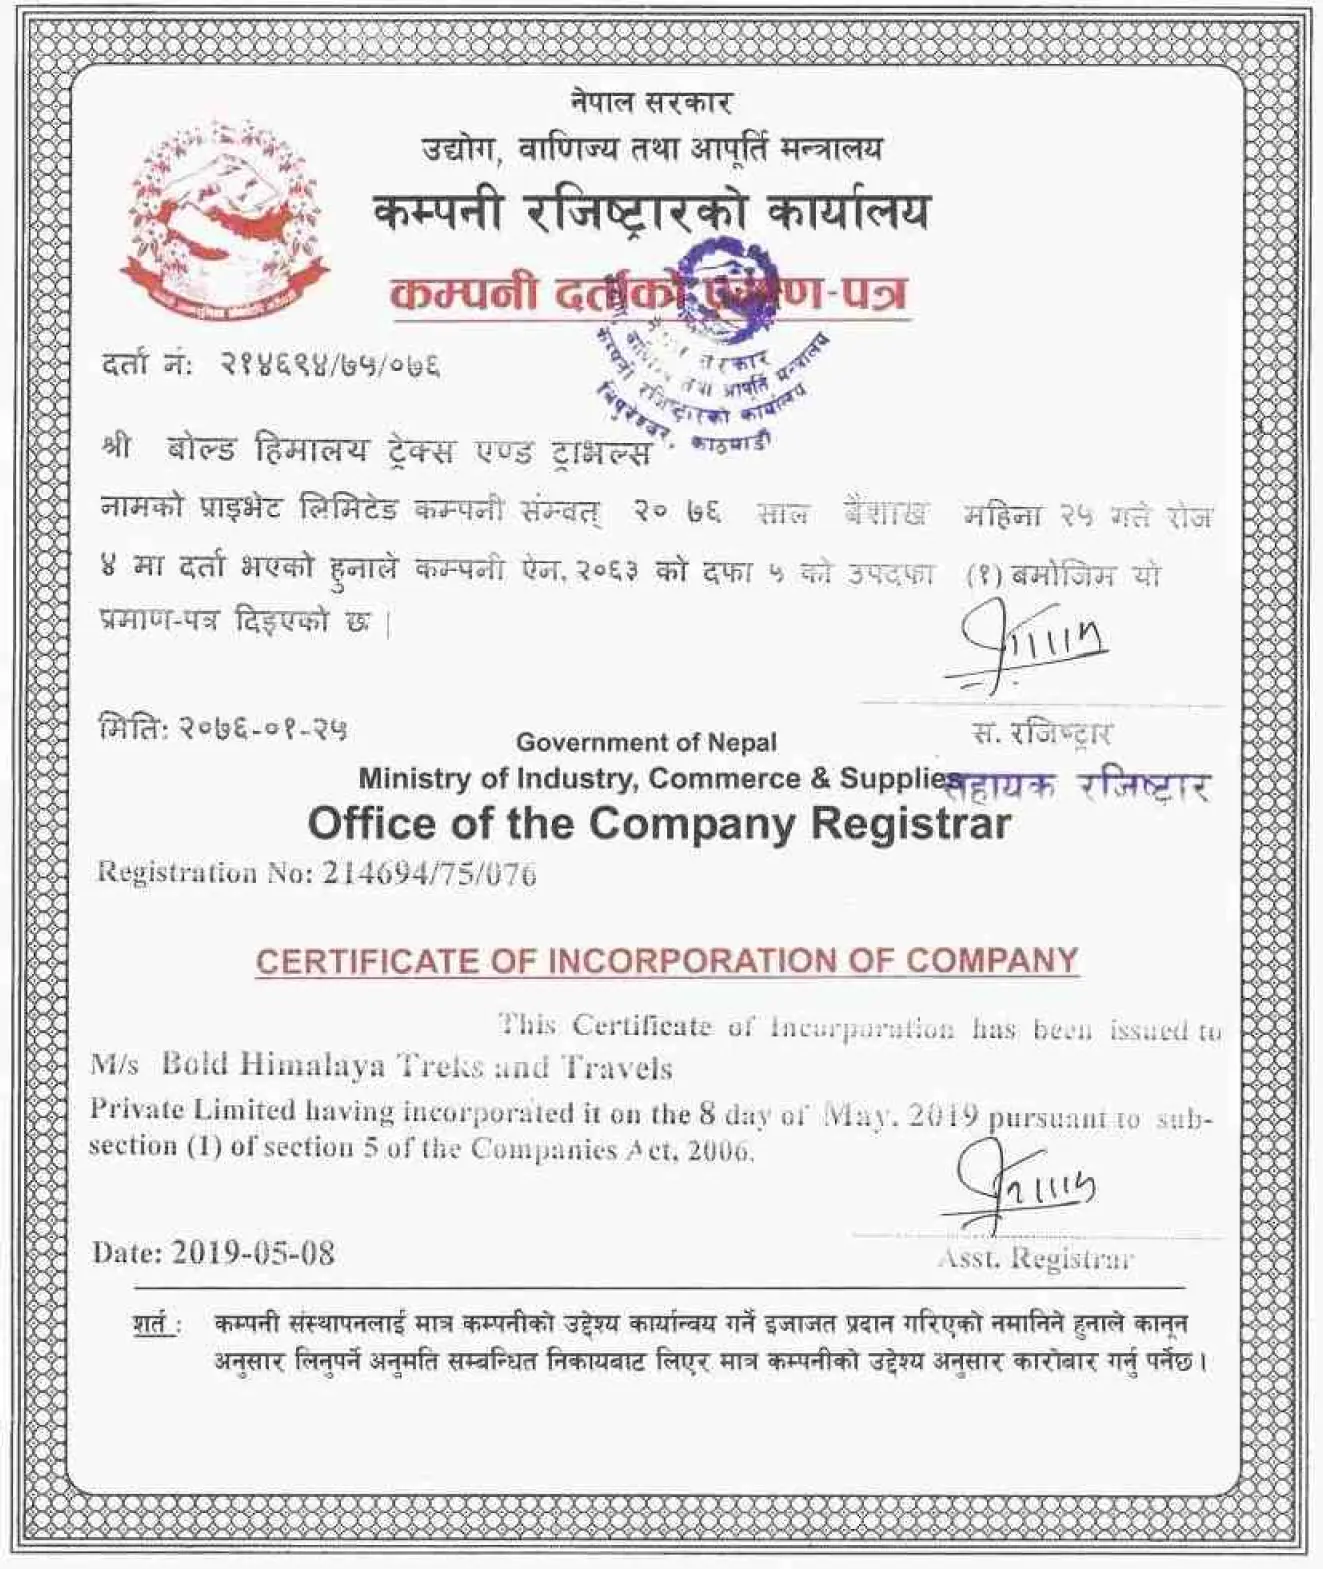 Bold Himalaya Registration Cerificate